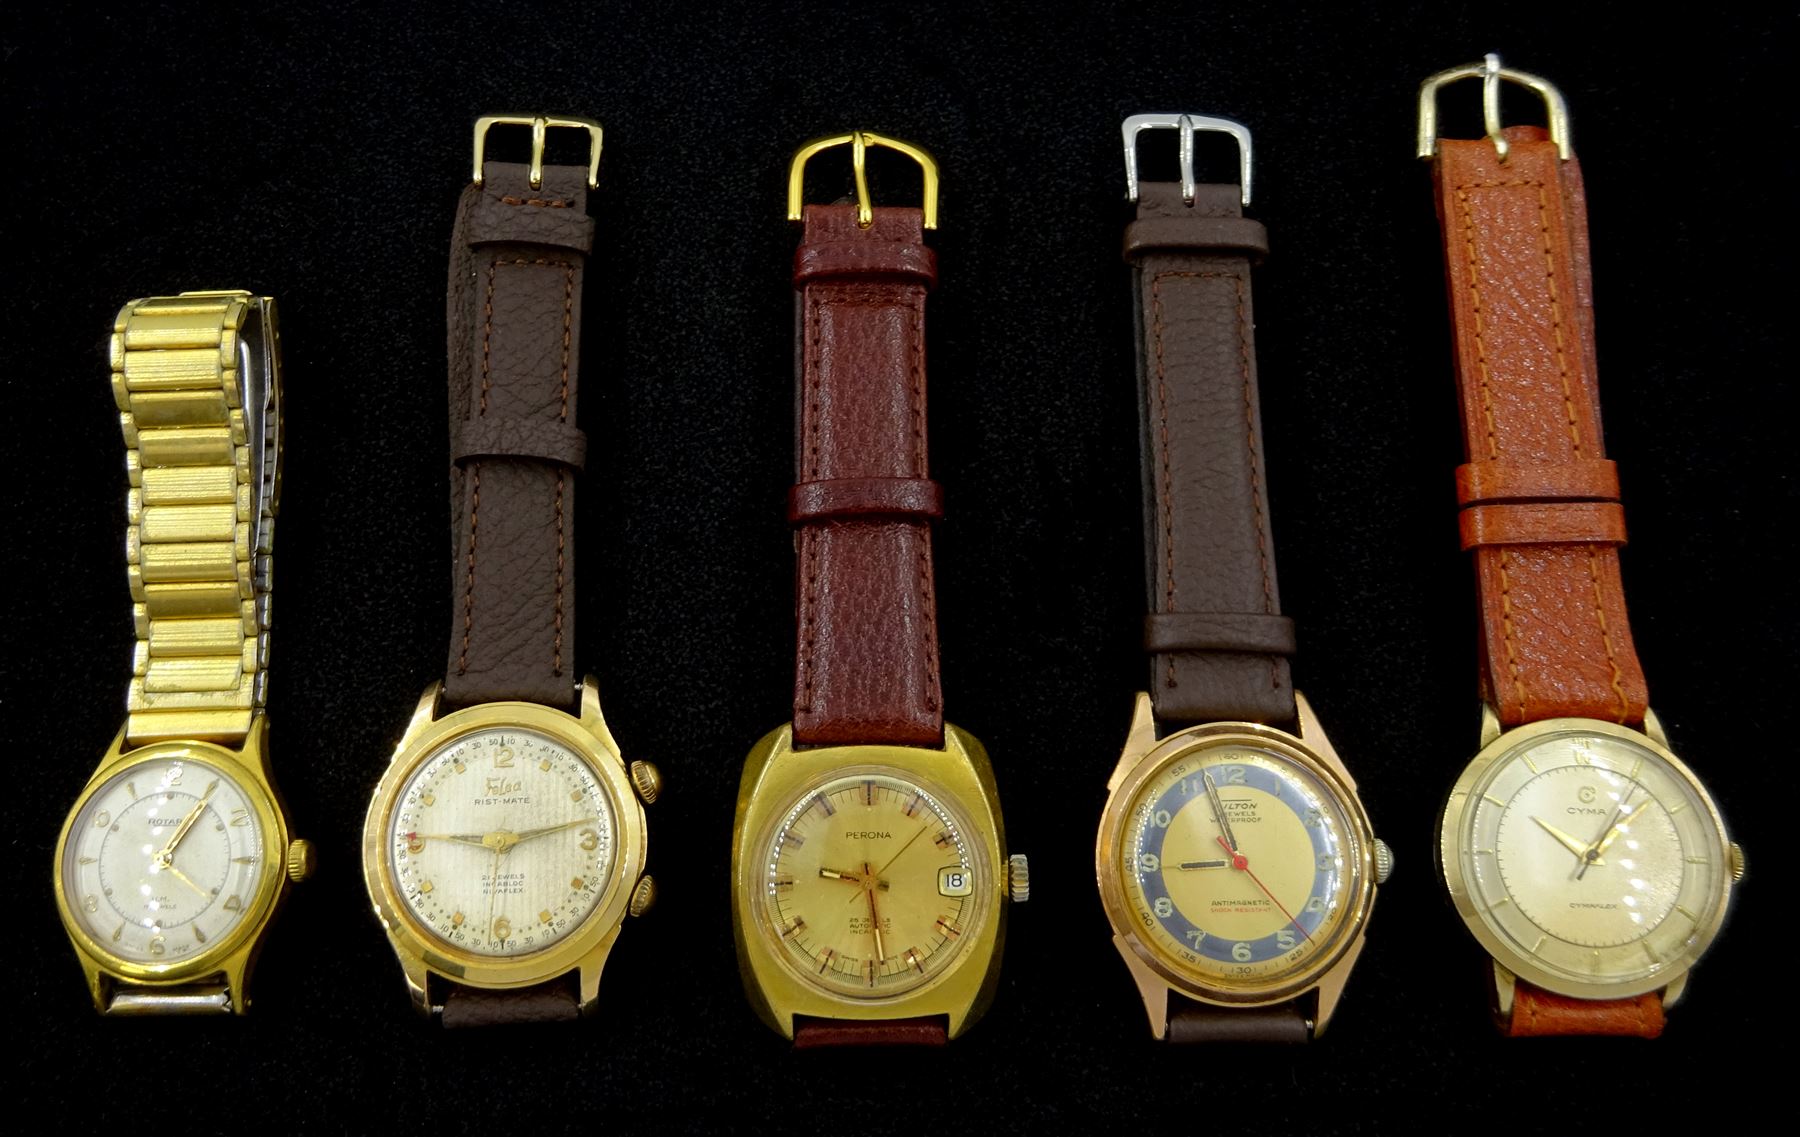 Four gentleman's manual wind wristwatches including Felea Rist-Mate 21 jewel